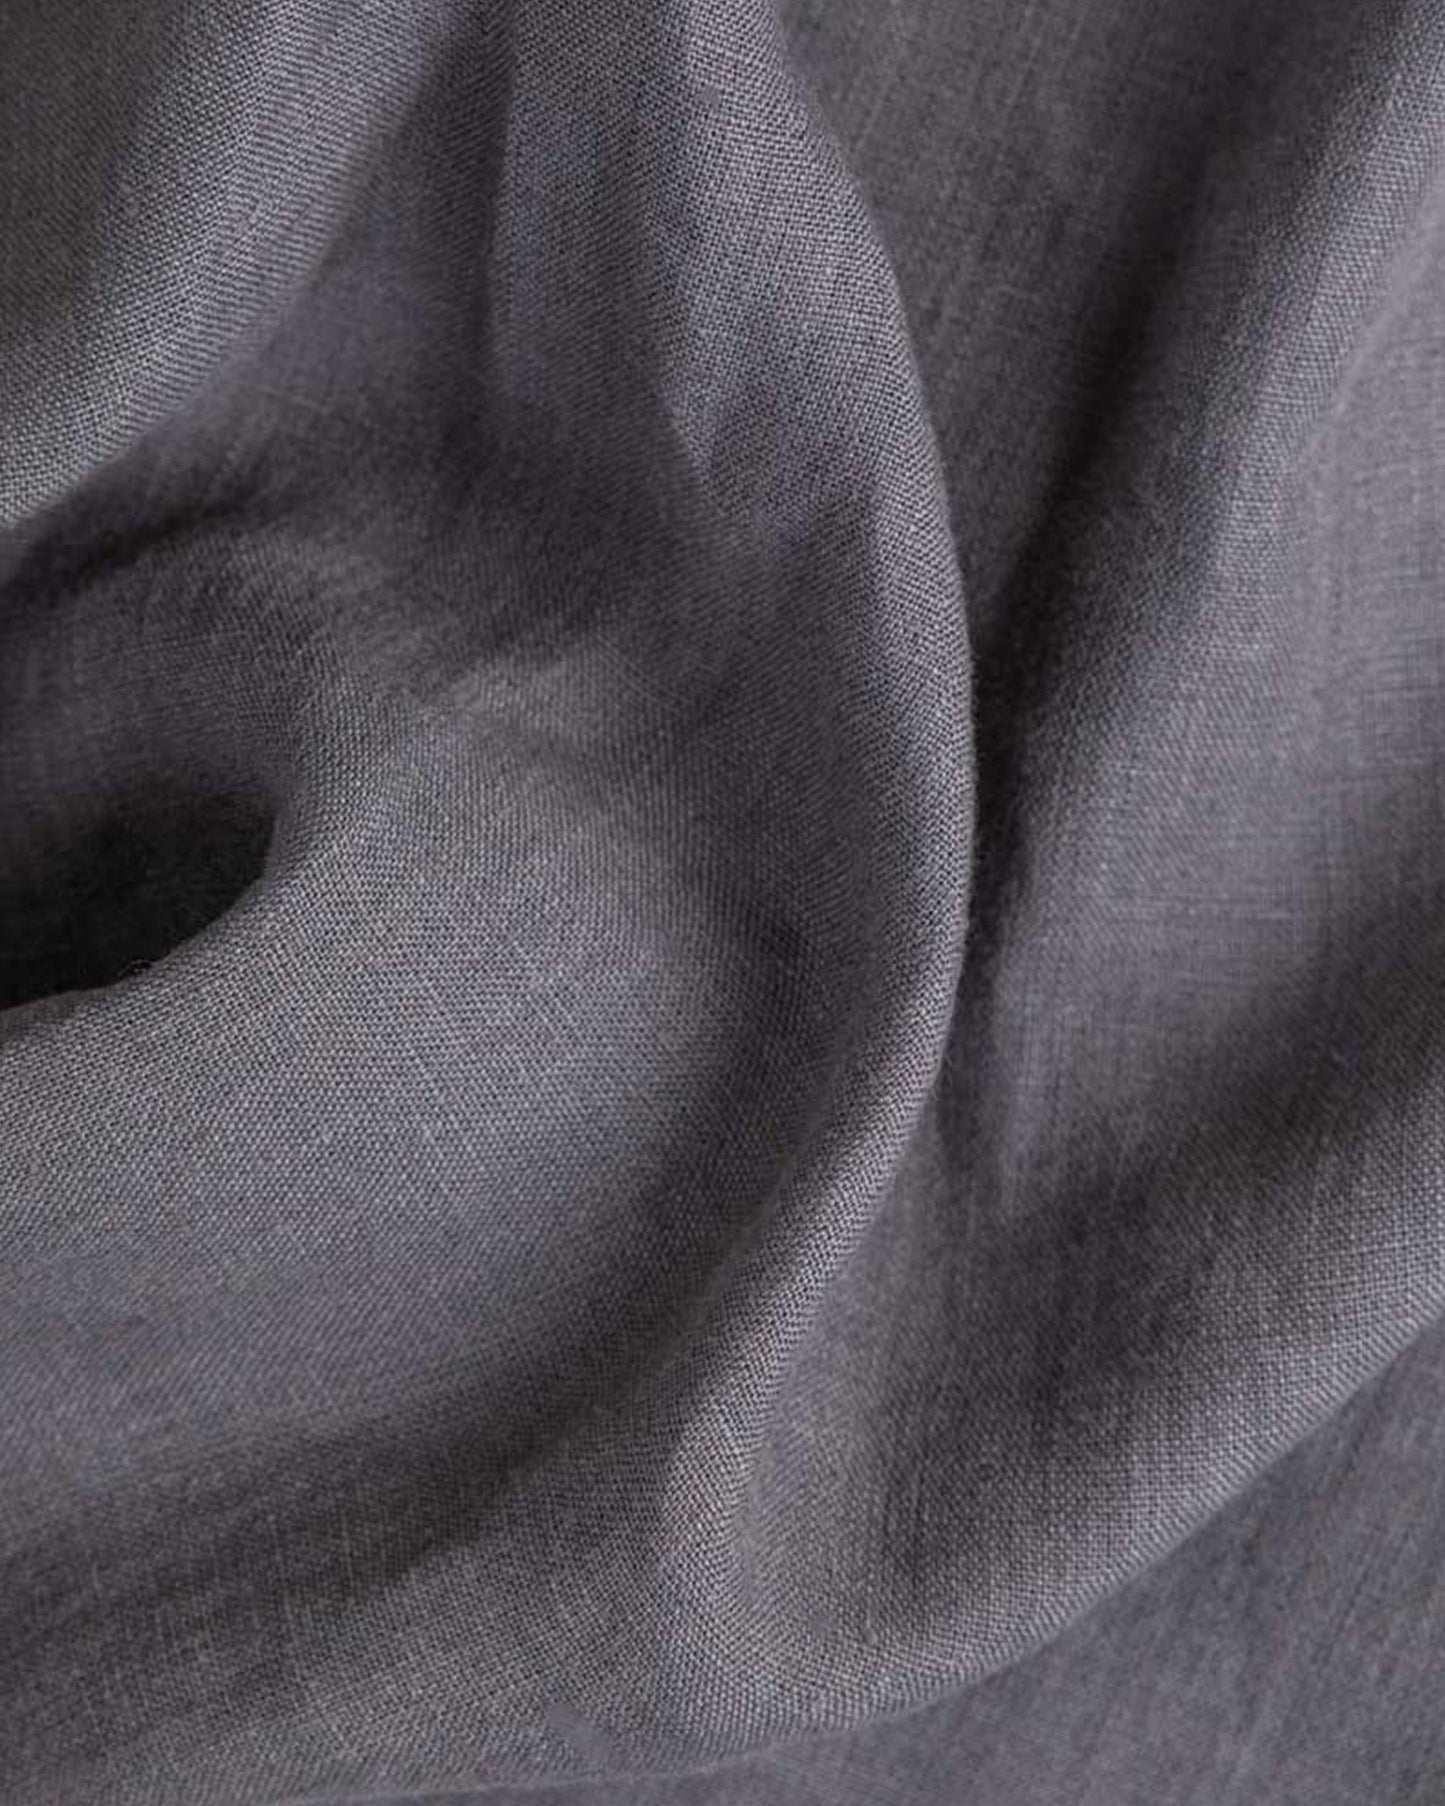 Charcoal gray linen sheet set (4 pcs) - MagicLinen